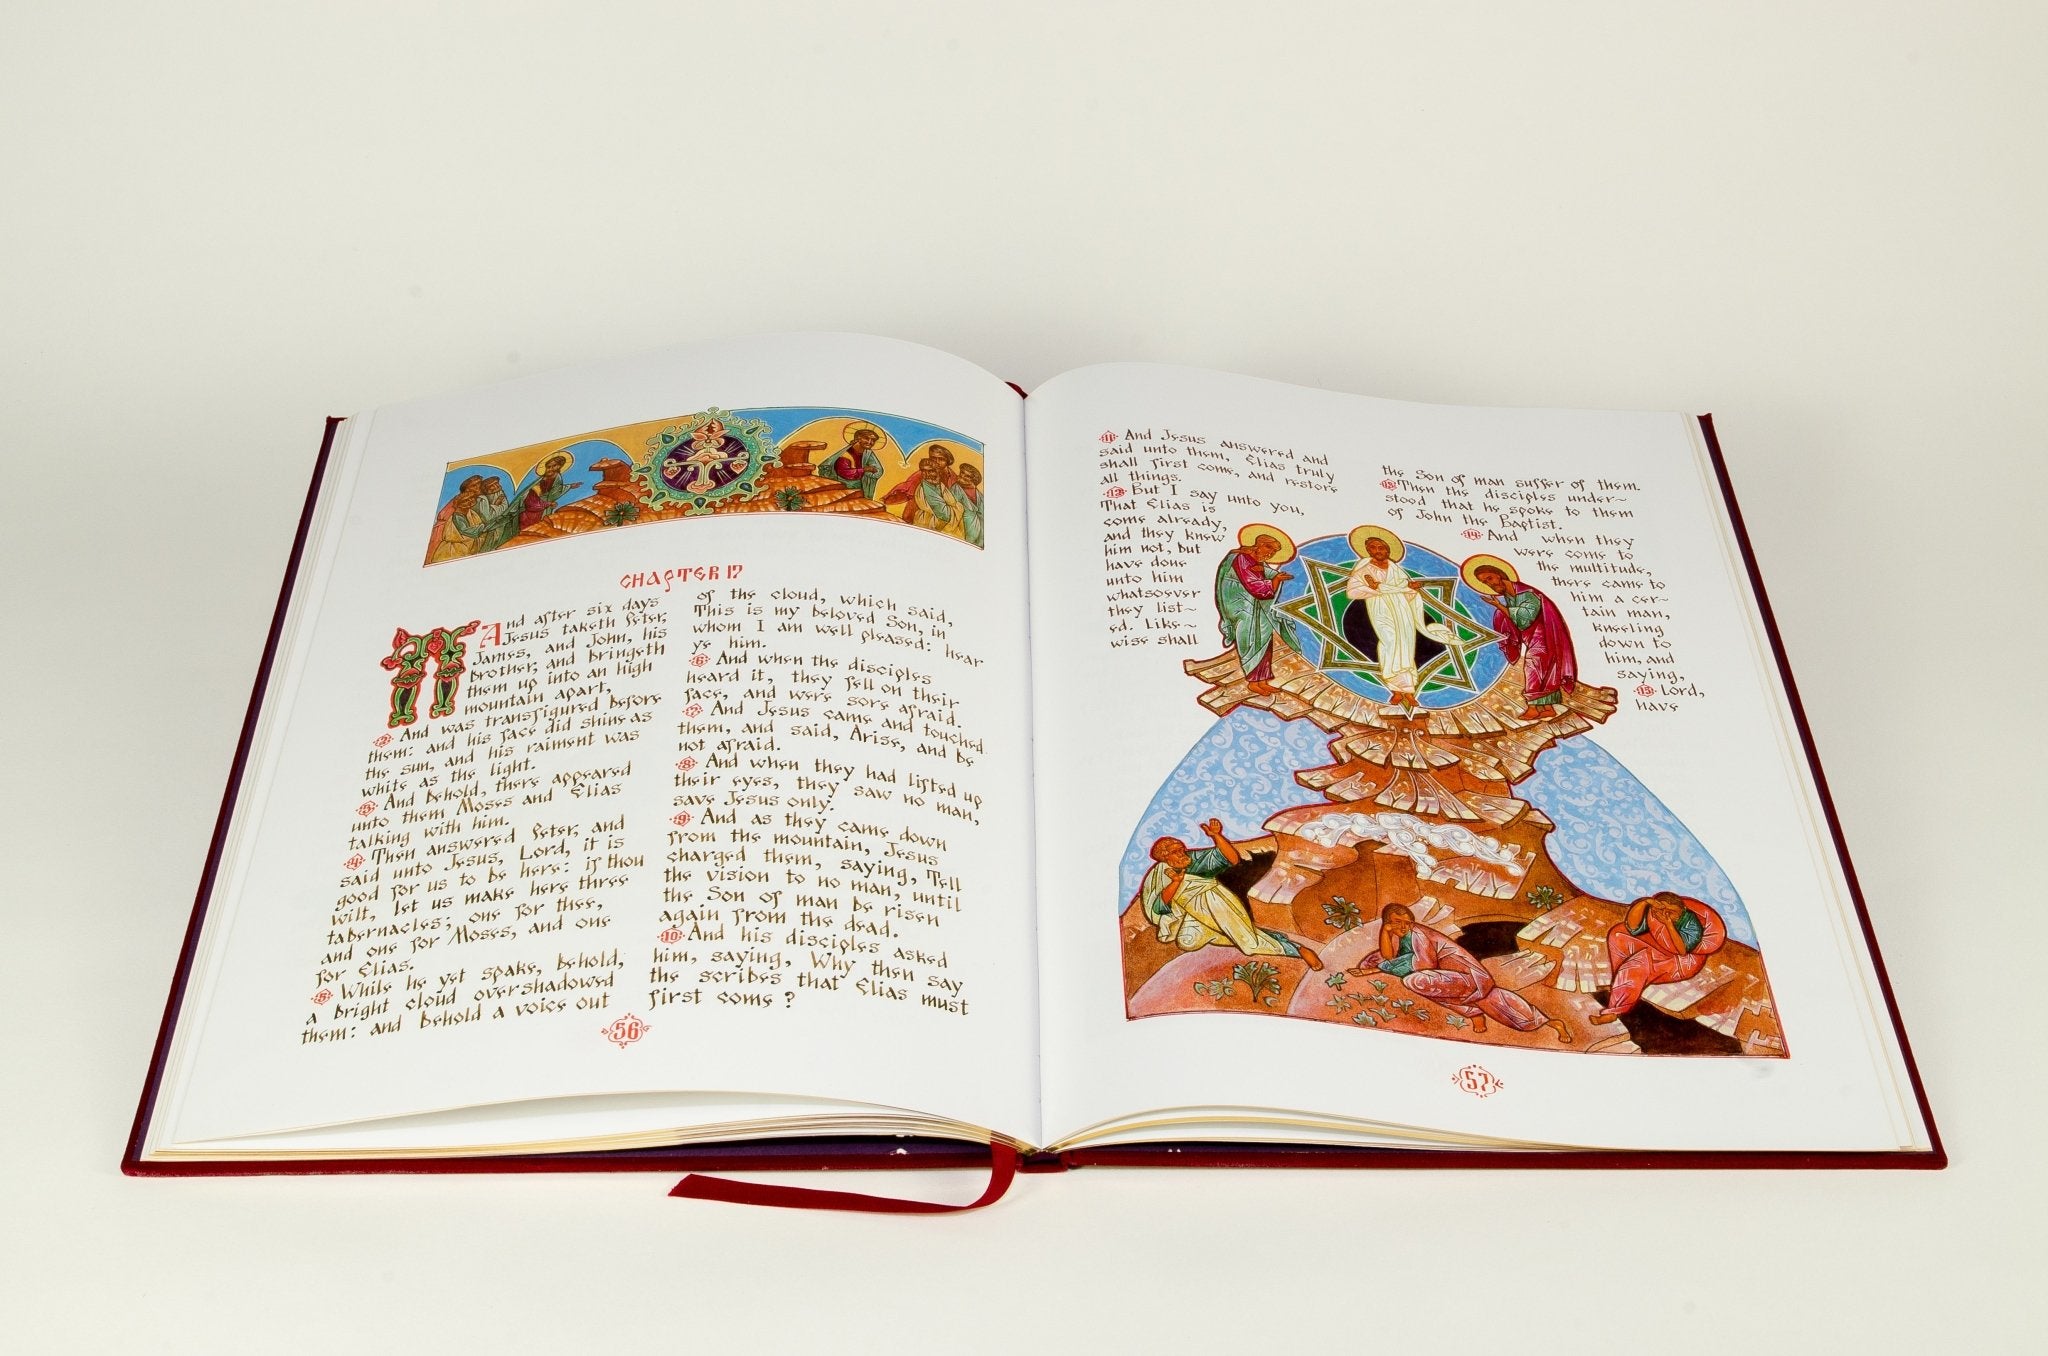 The Illuminated Gospel of St. Matthew - Holy Cross Monastery